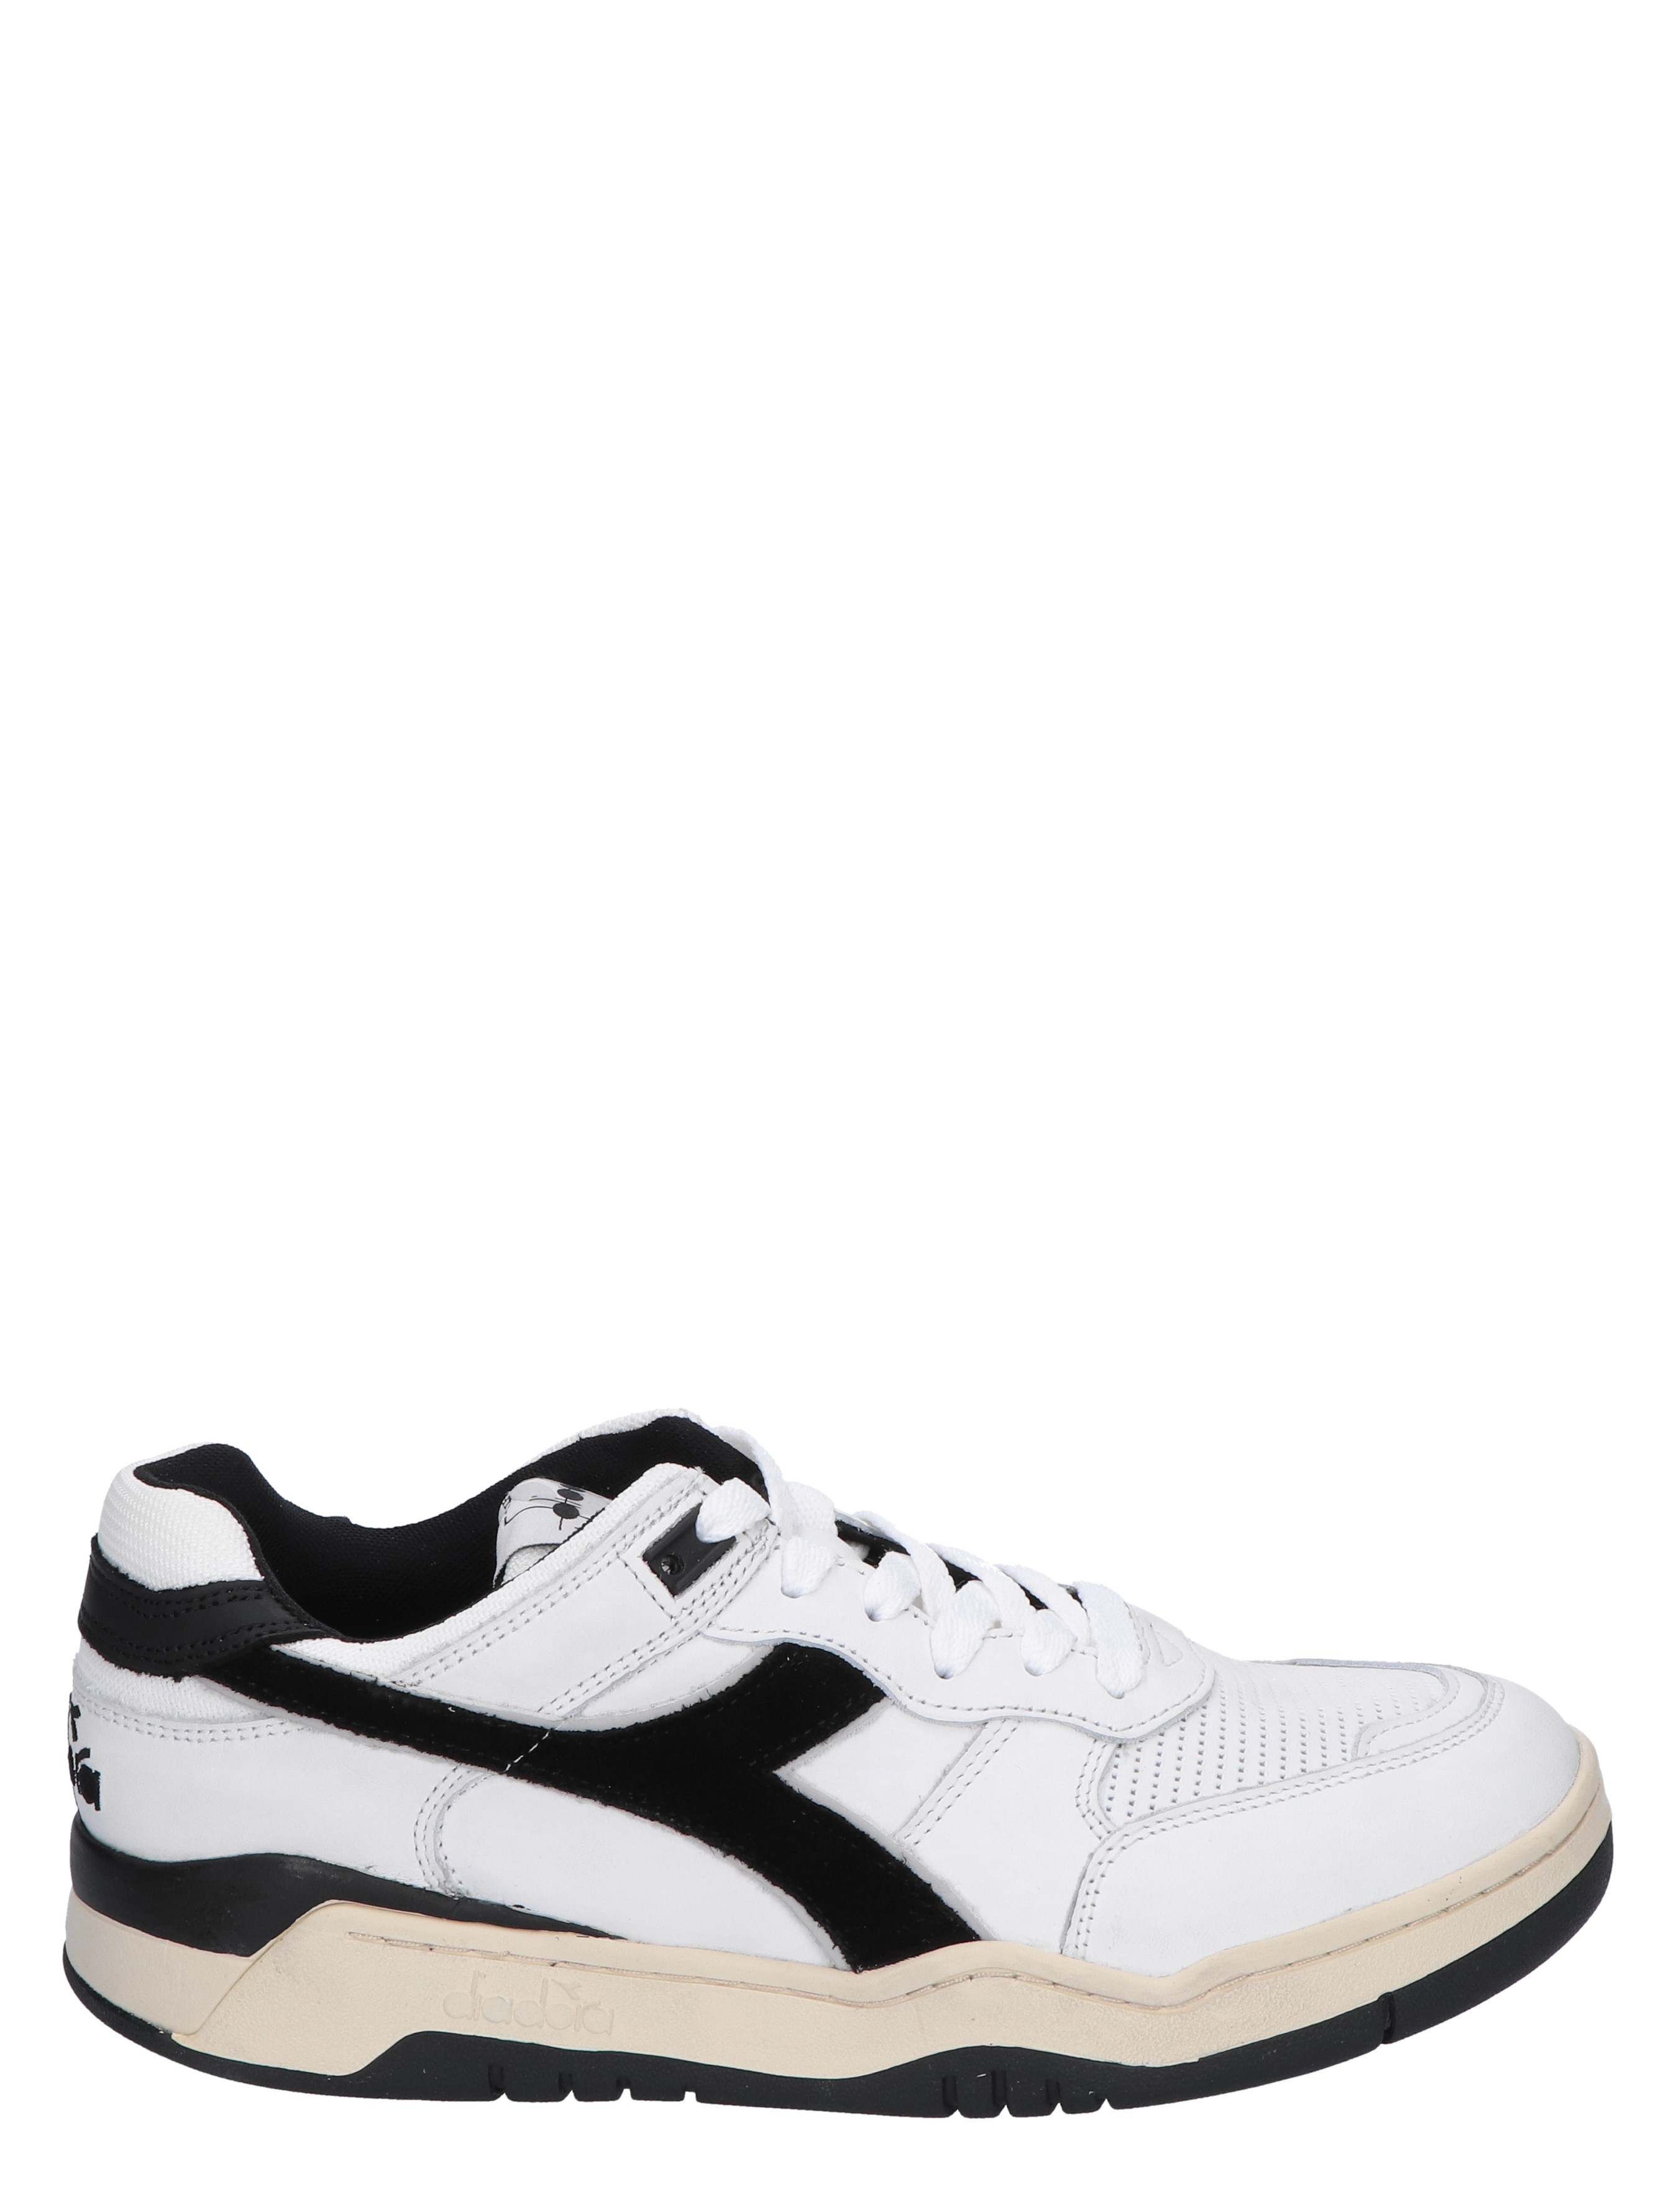 Diadora Heritage Boris Becker 560 White Black Lage sneakers